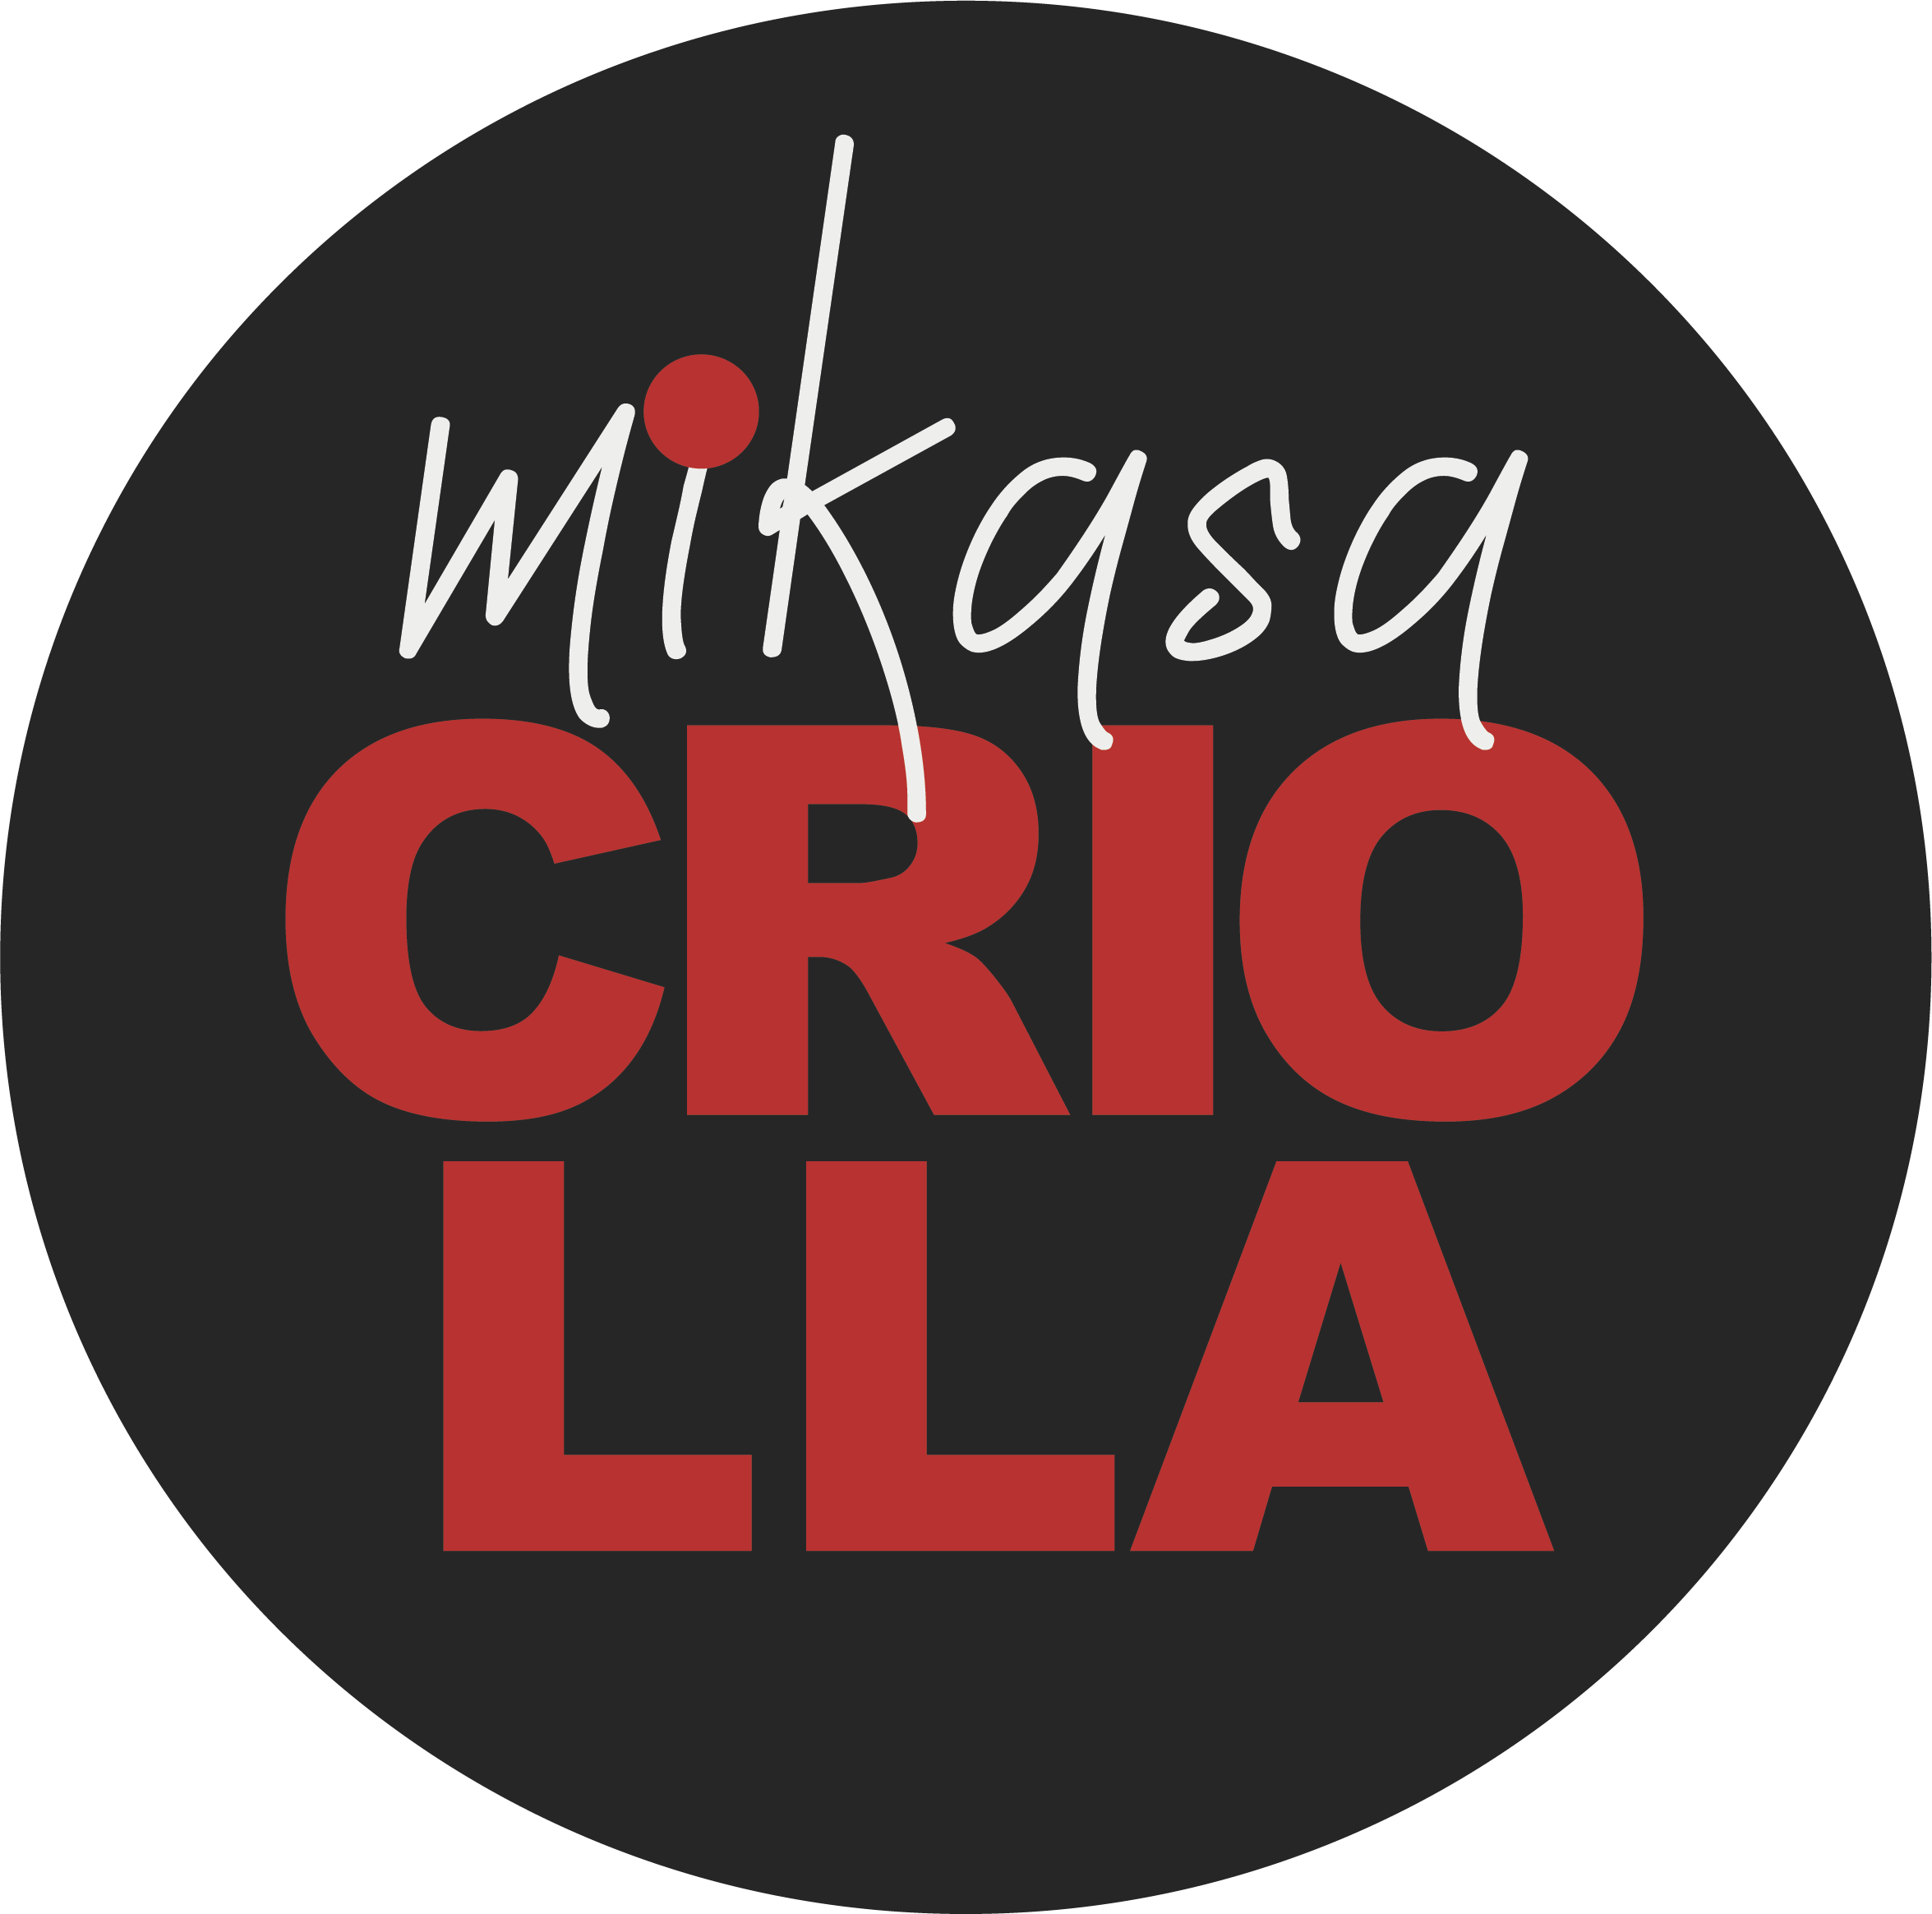 Mikasa Criolla LLC 56 Patton Avenue